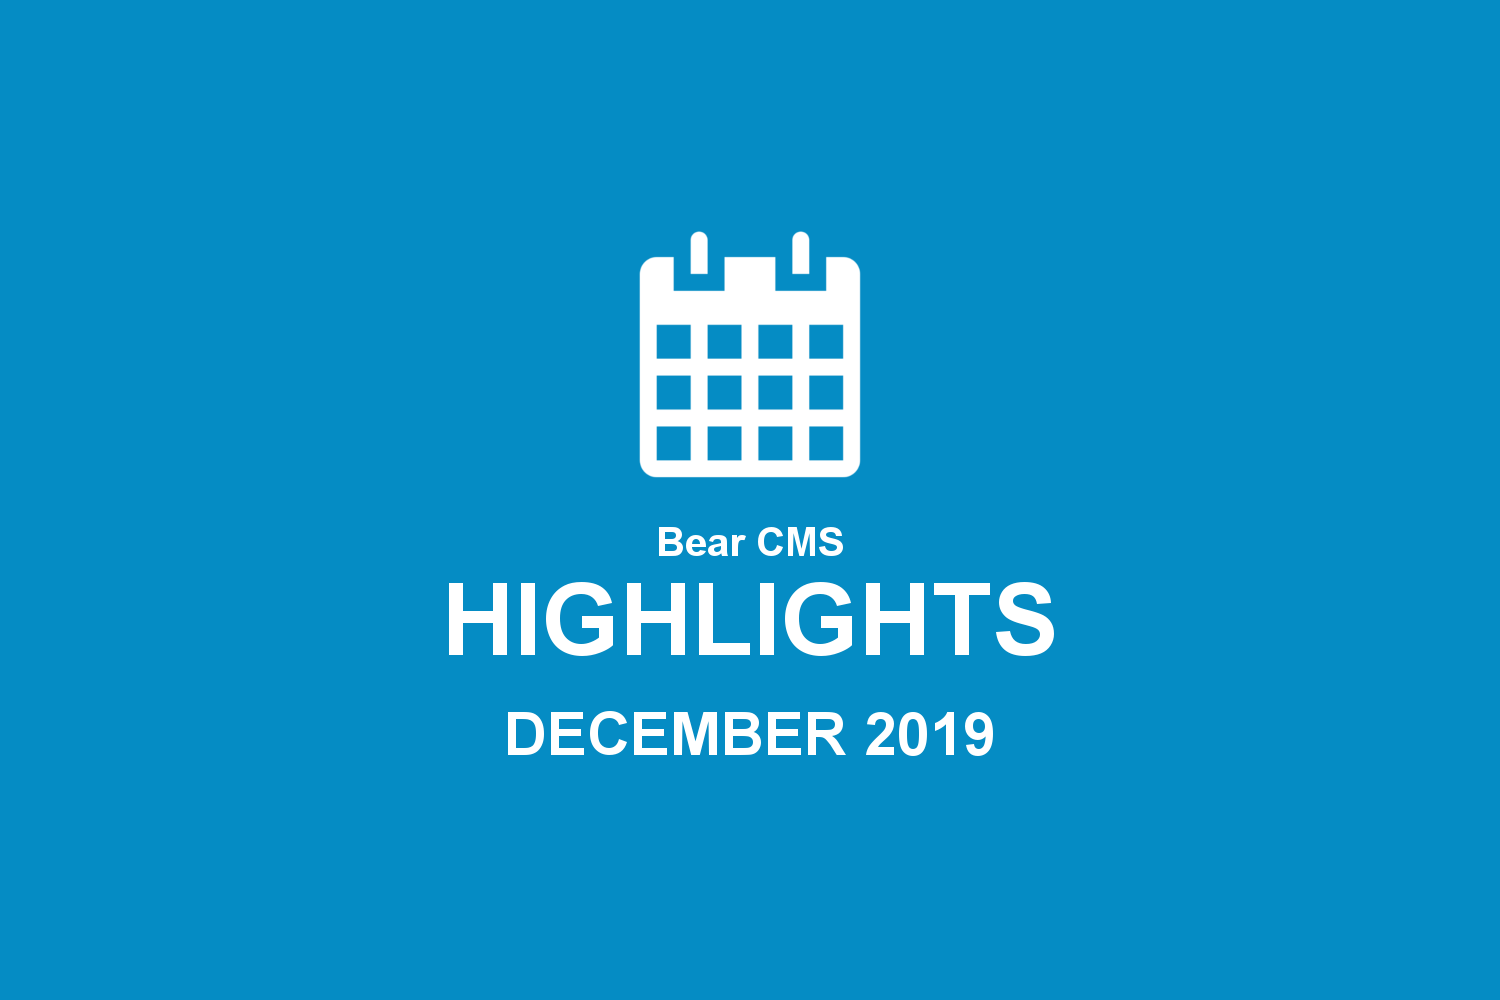 Bear CMS highlights (December 2019)